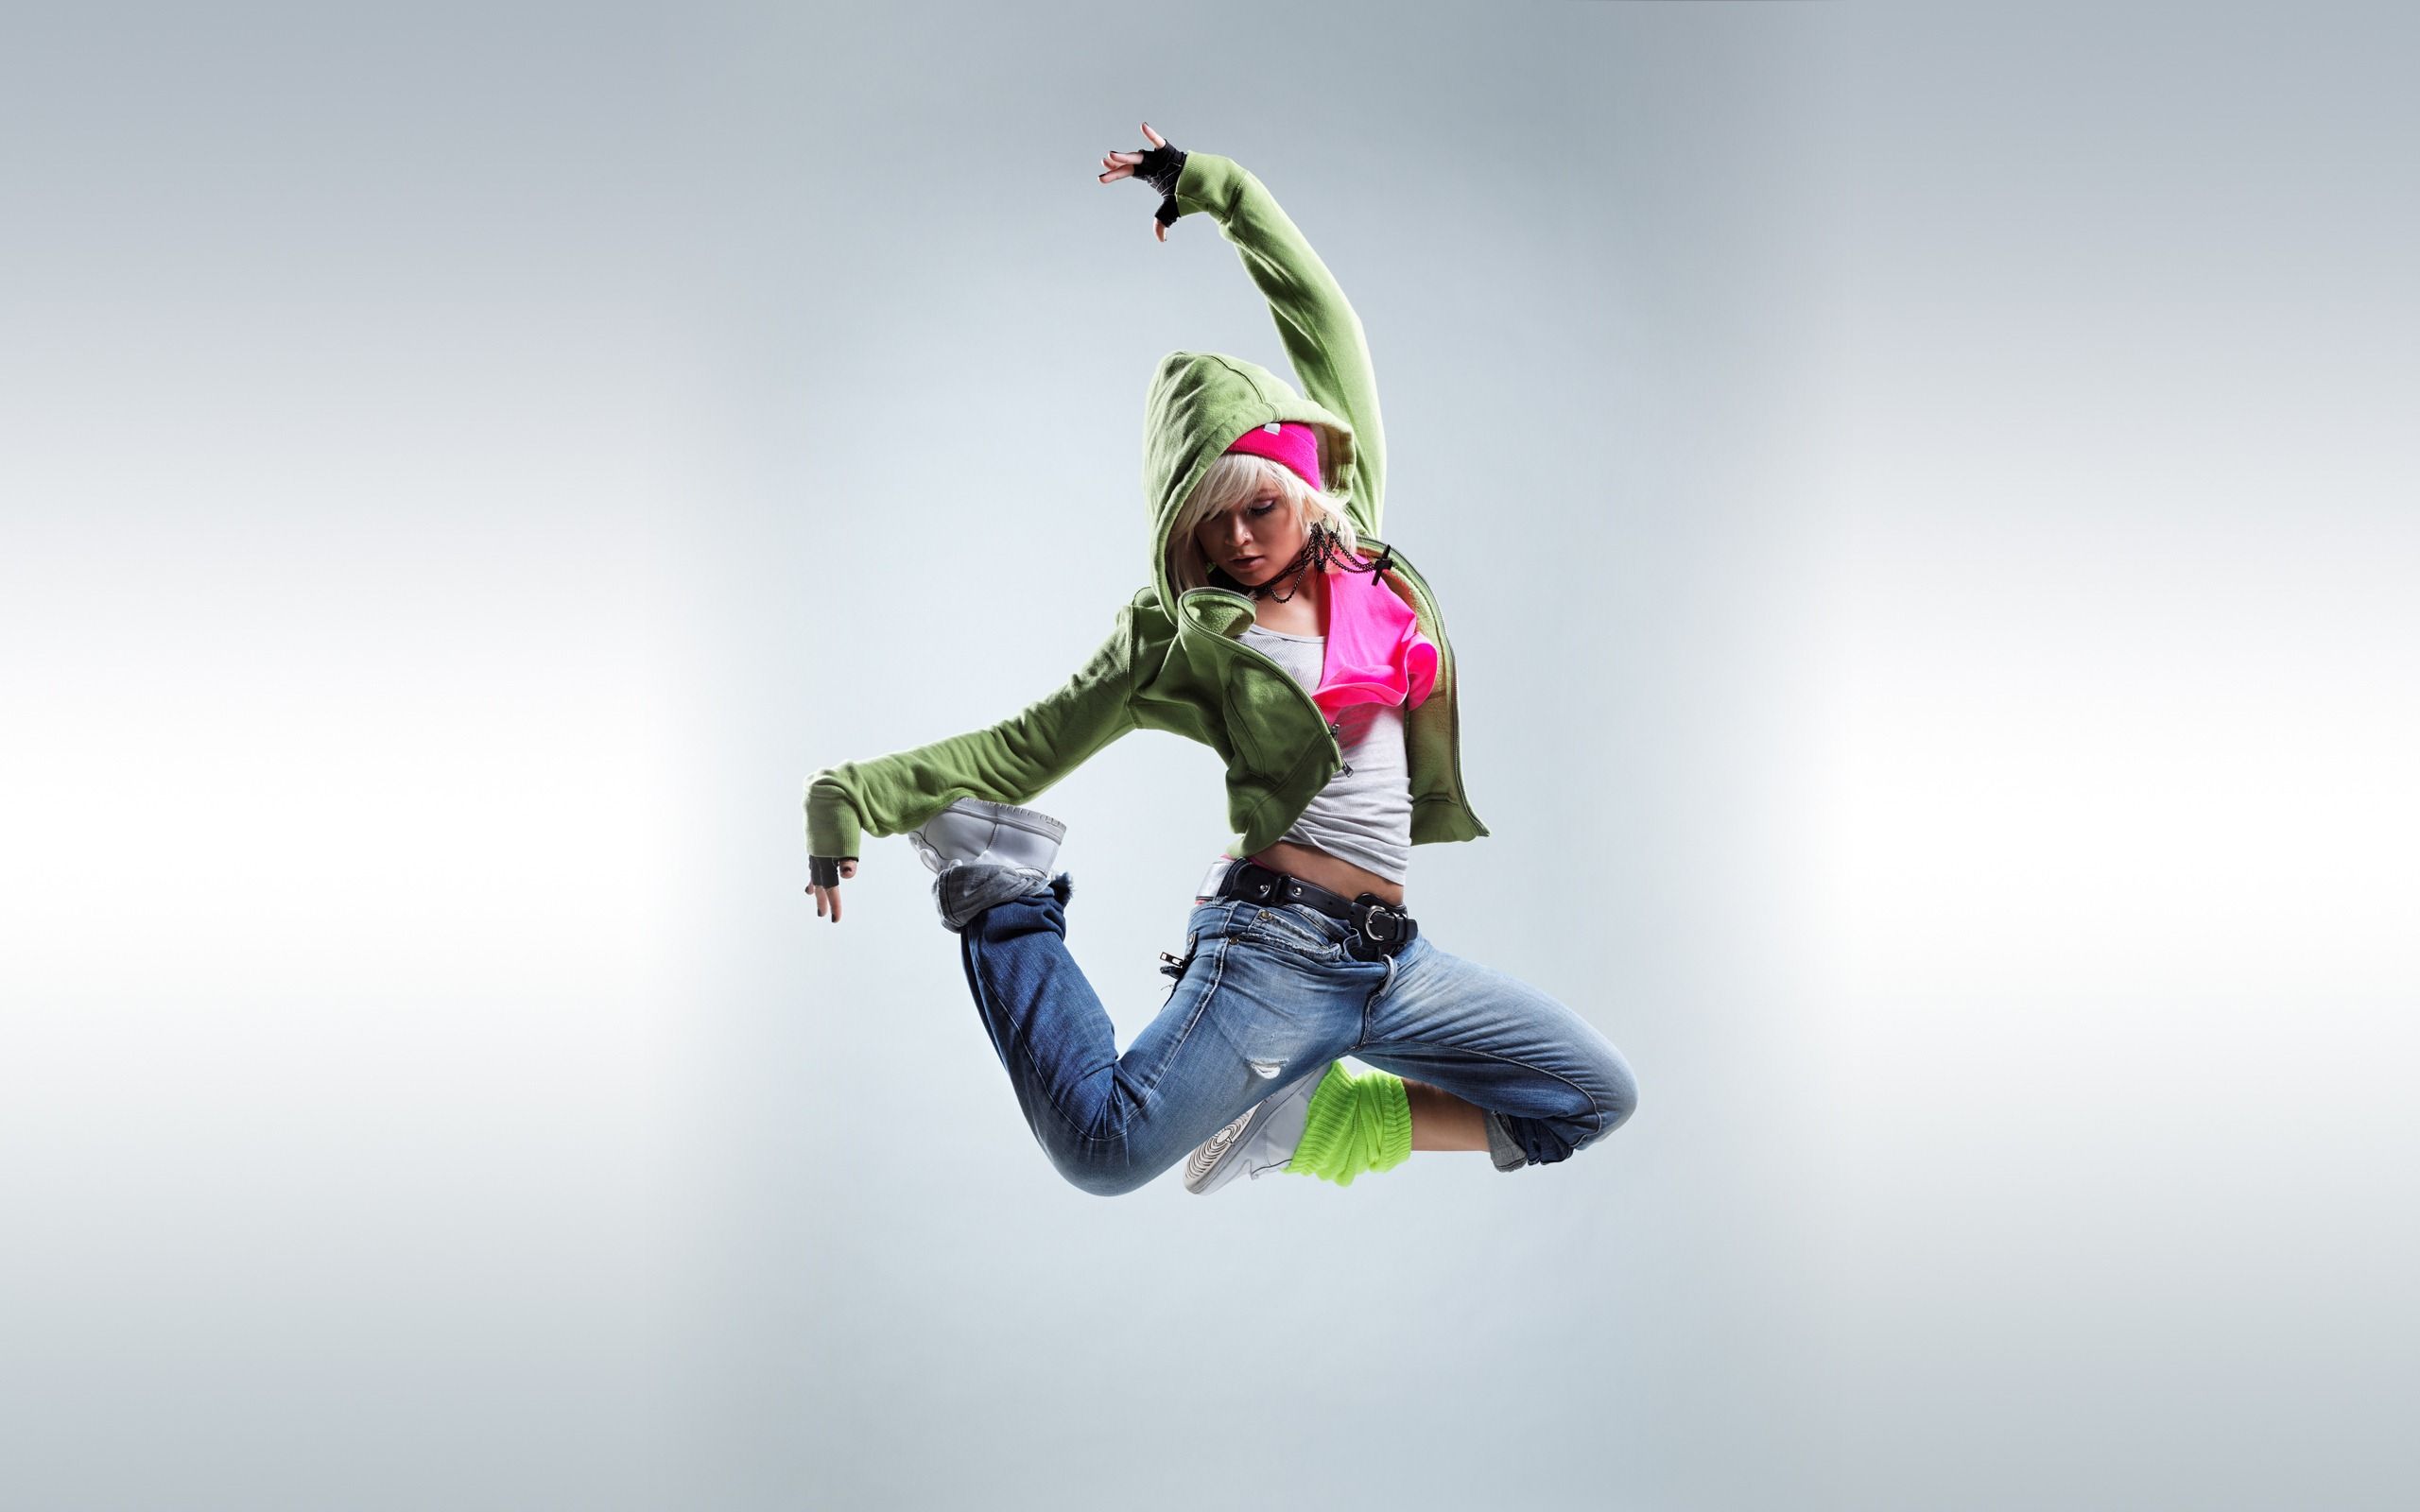 Best Dance Wallpaper 6 Dance Picture in Jump Wallpaper for Free. Dance wallpaper, Dance picture, Hip hop dance